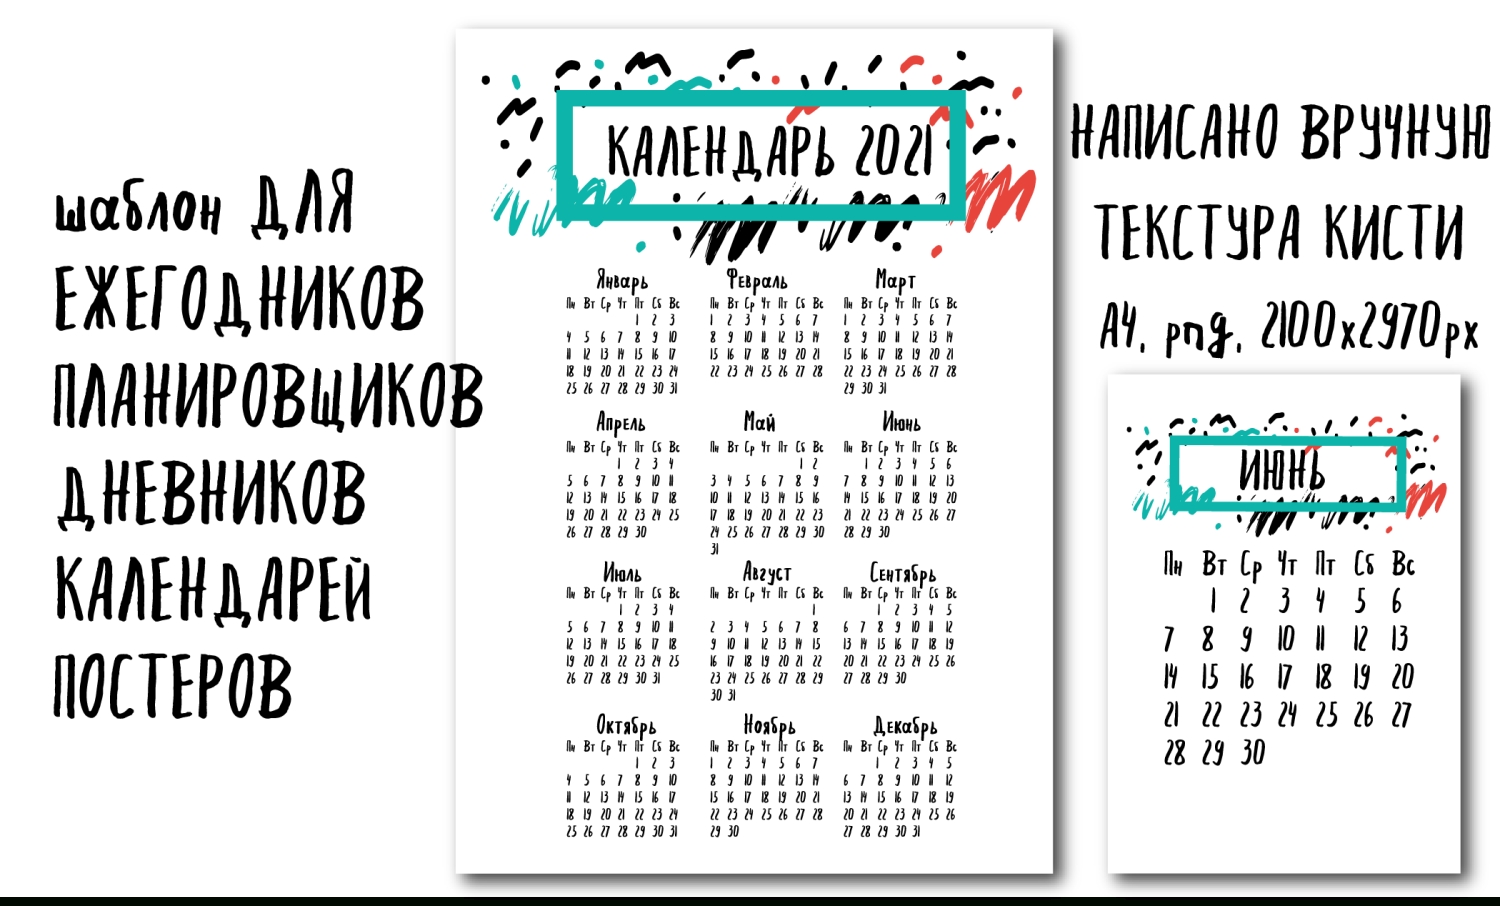 Календарь На 2021 Год На Русском Языке. Шаблон Календарь Планировщик Август 2021